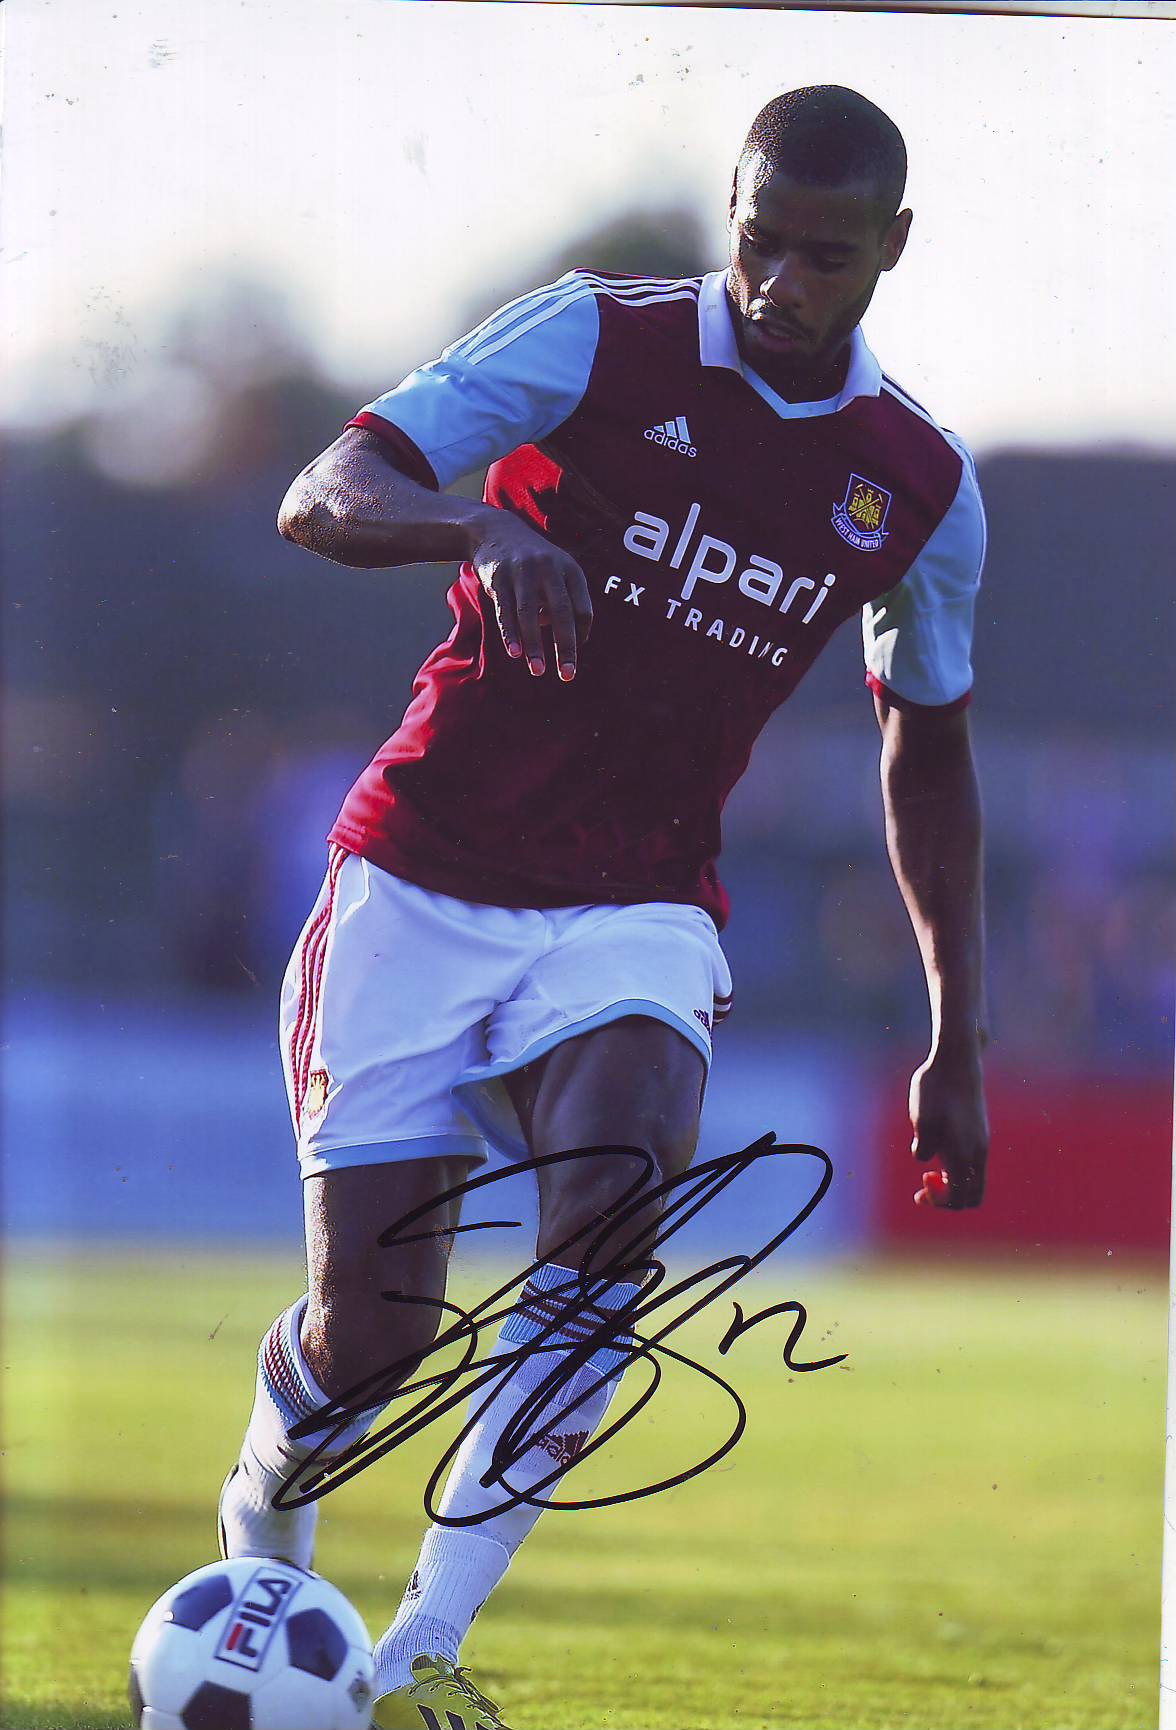 High quality colour 8x12 photograph signed by current West Ham forward Ricardo Vaz Te. Bold black